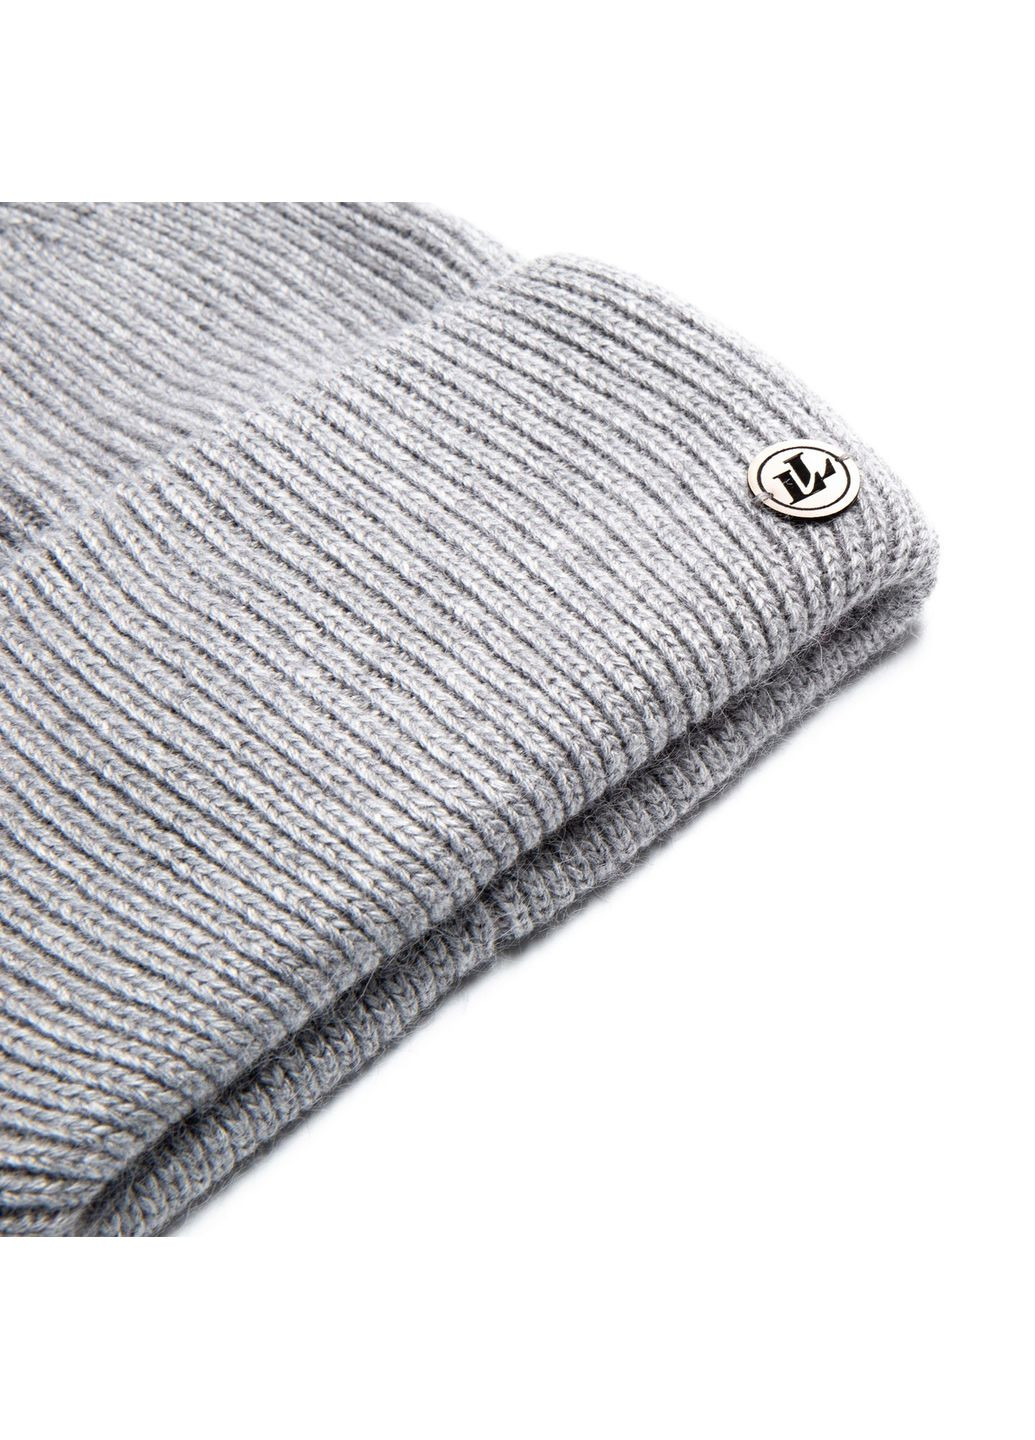 Набор шапка бини + шарф женский шерсть серый GEORGE LuckyLOOK 695-000 (289359688)